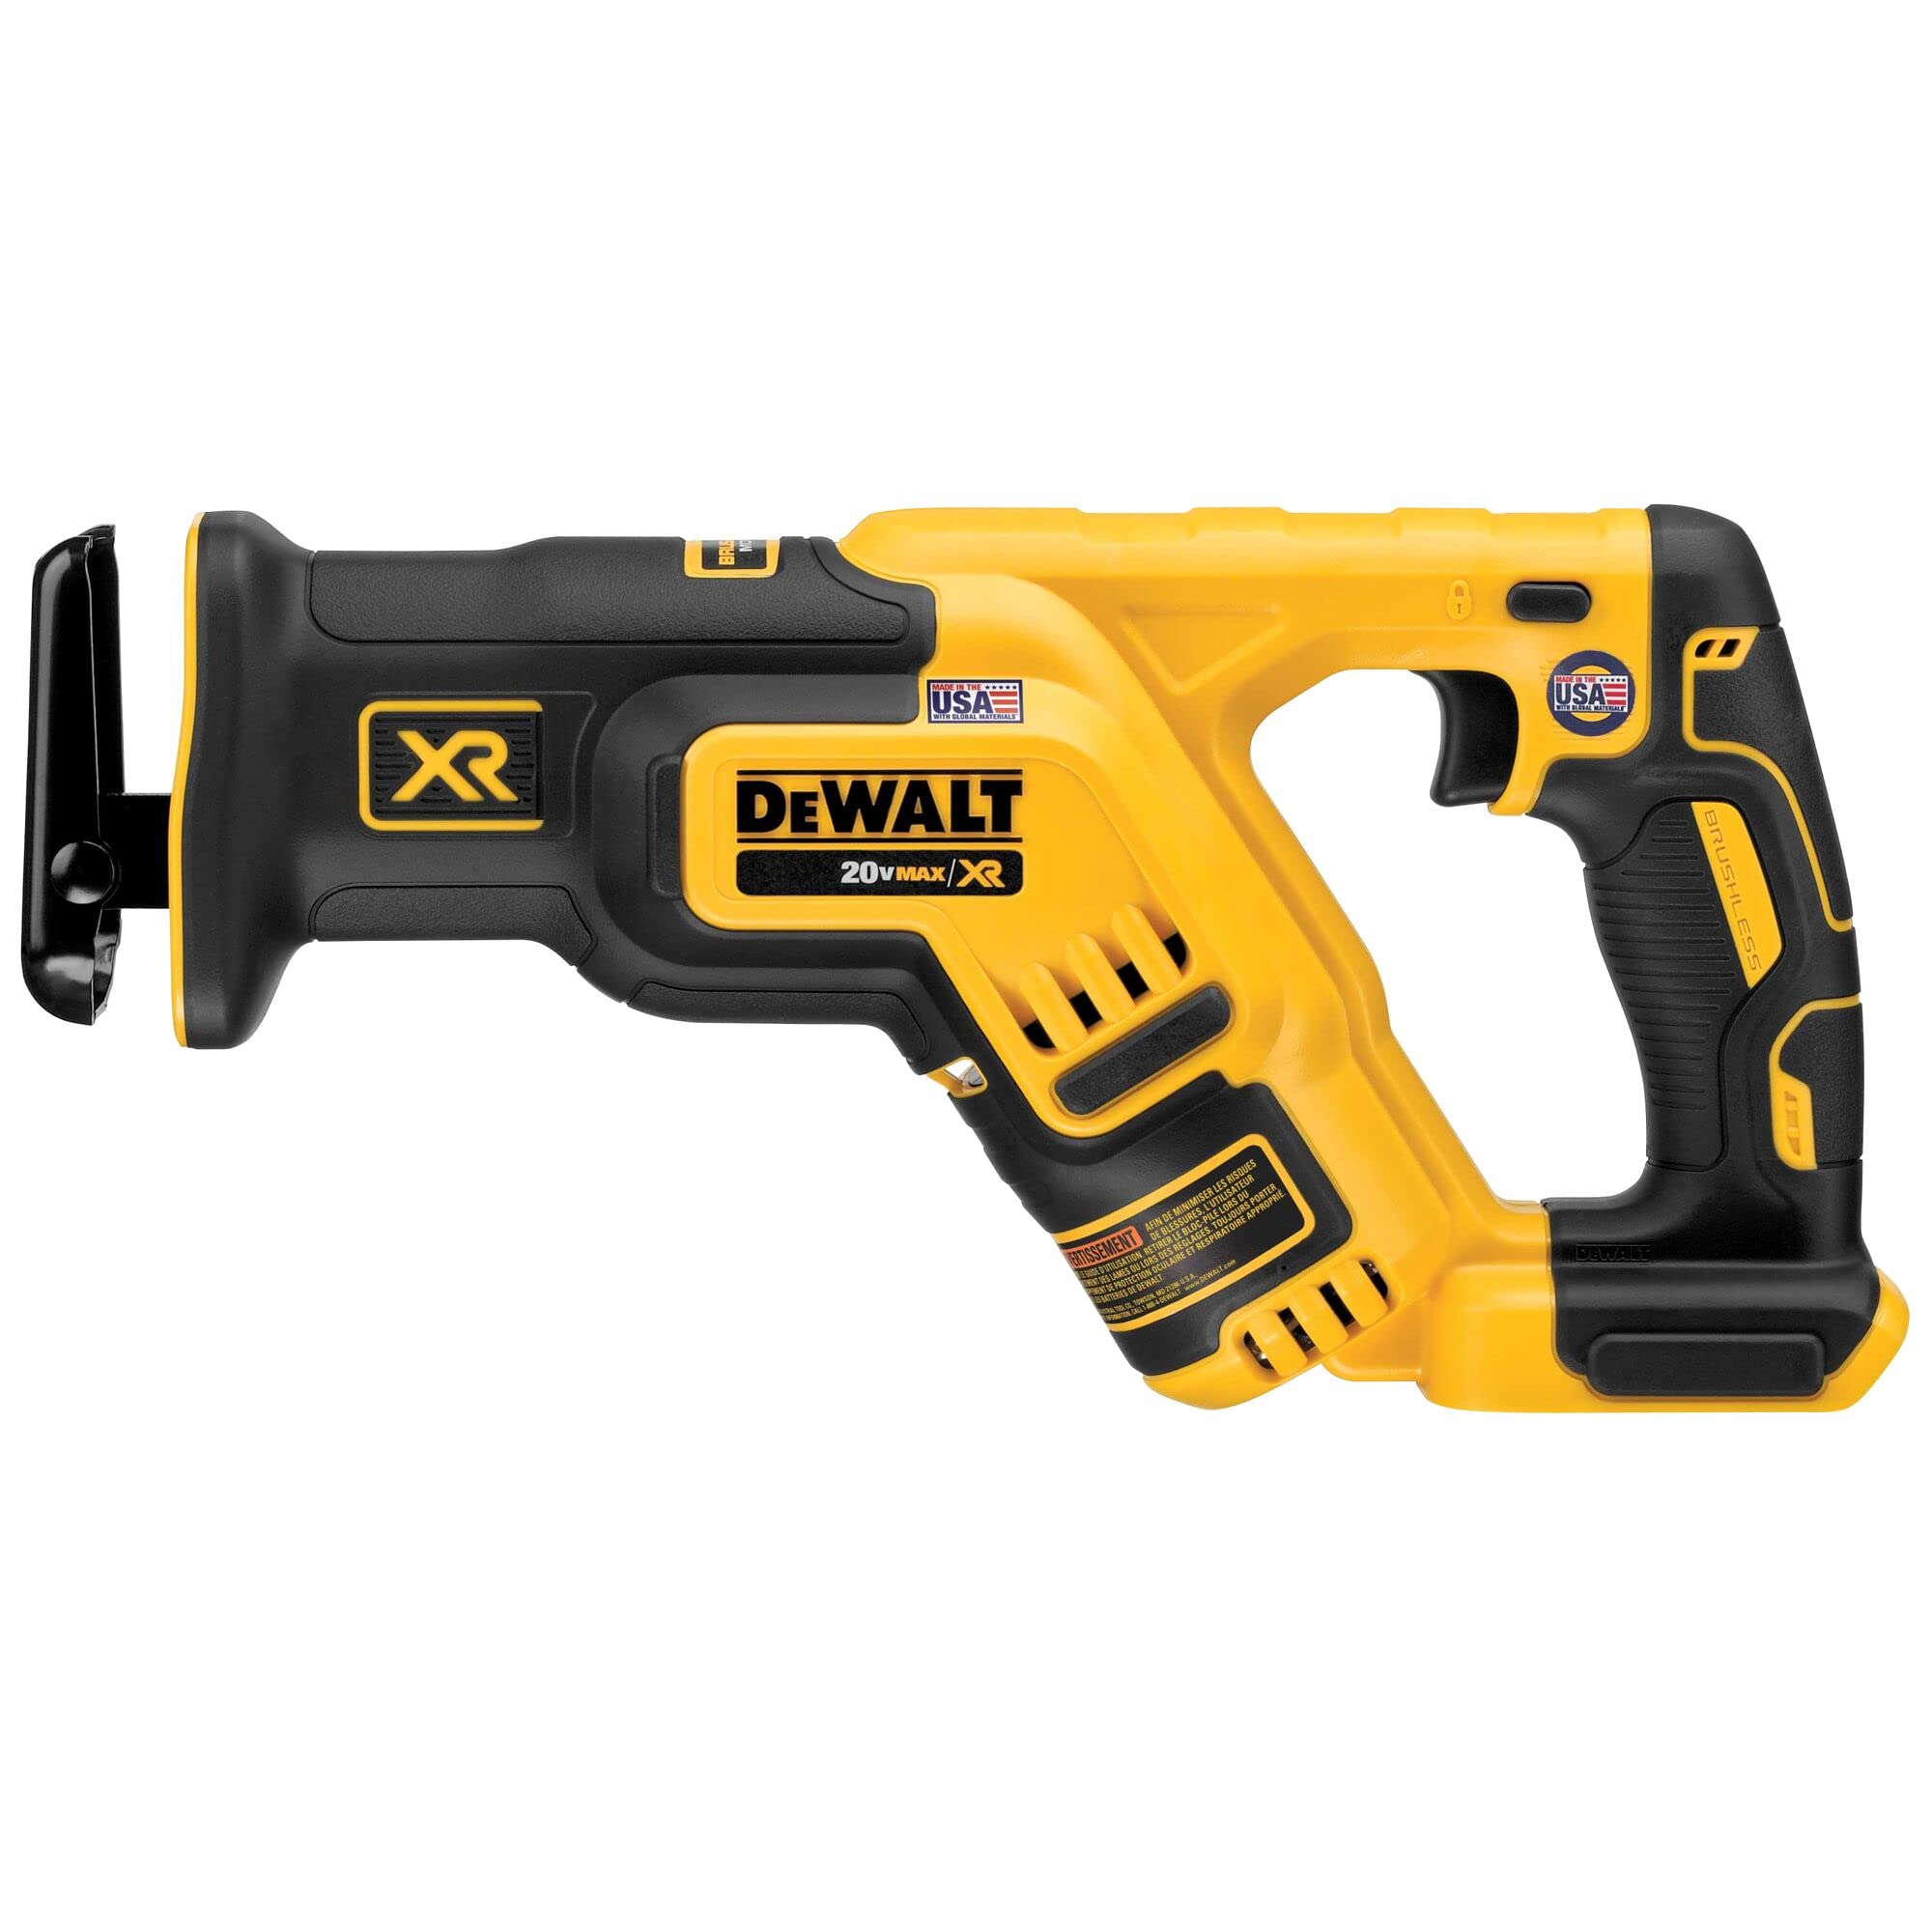 20-Volt DEWALT MAX XR Reciprocating Saw (DCS367B, Tool Only) $129 + Free Shipping